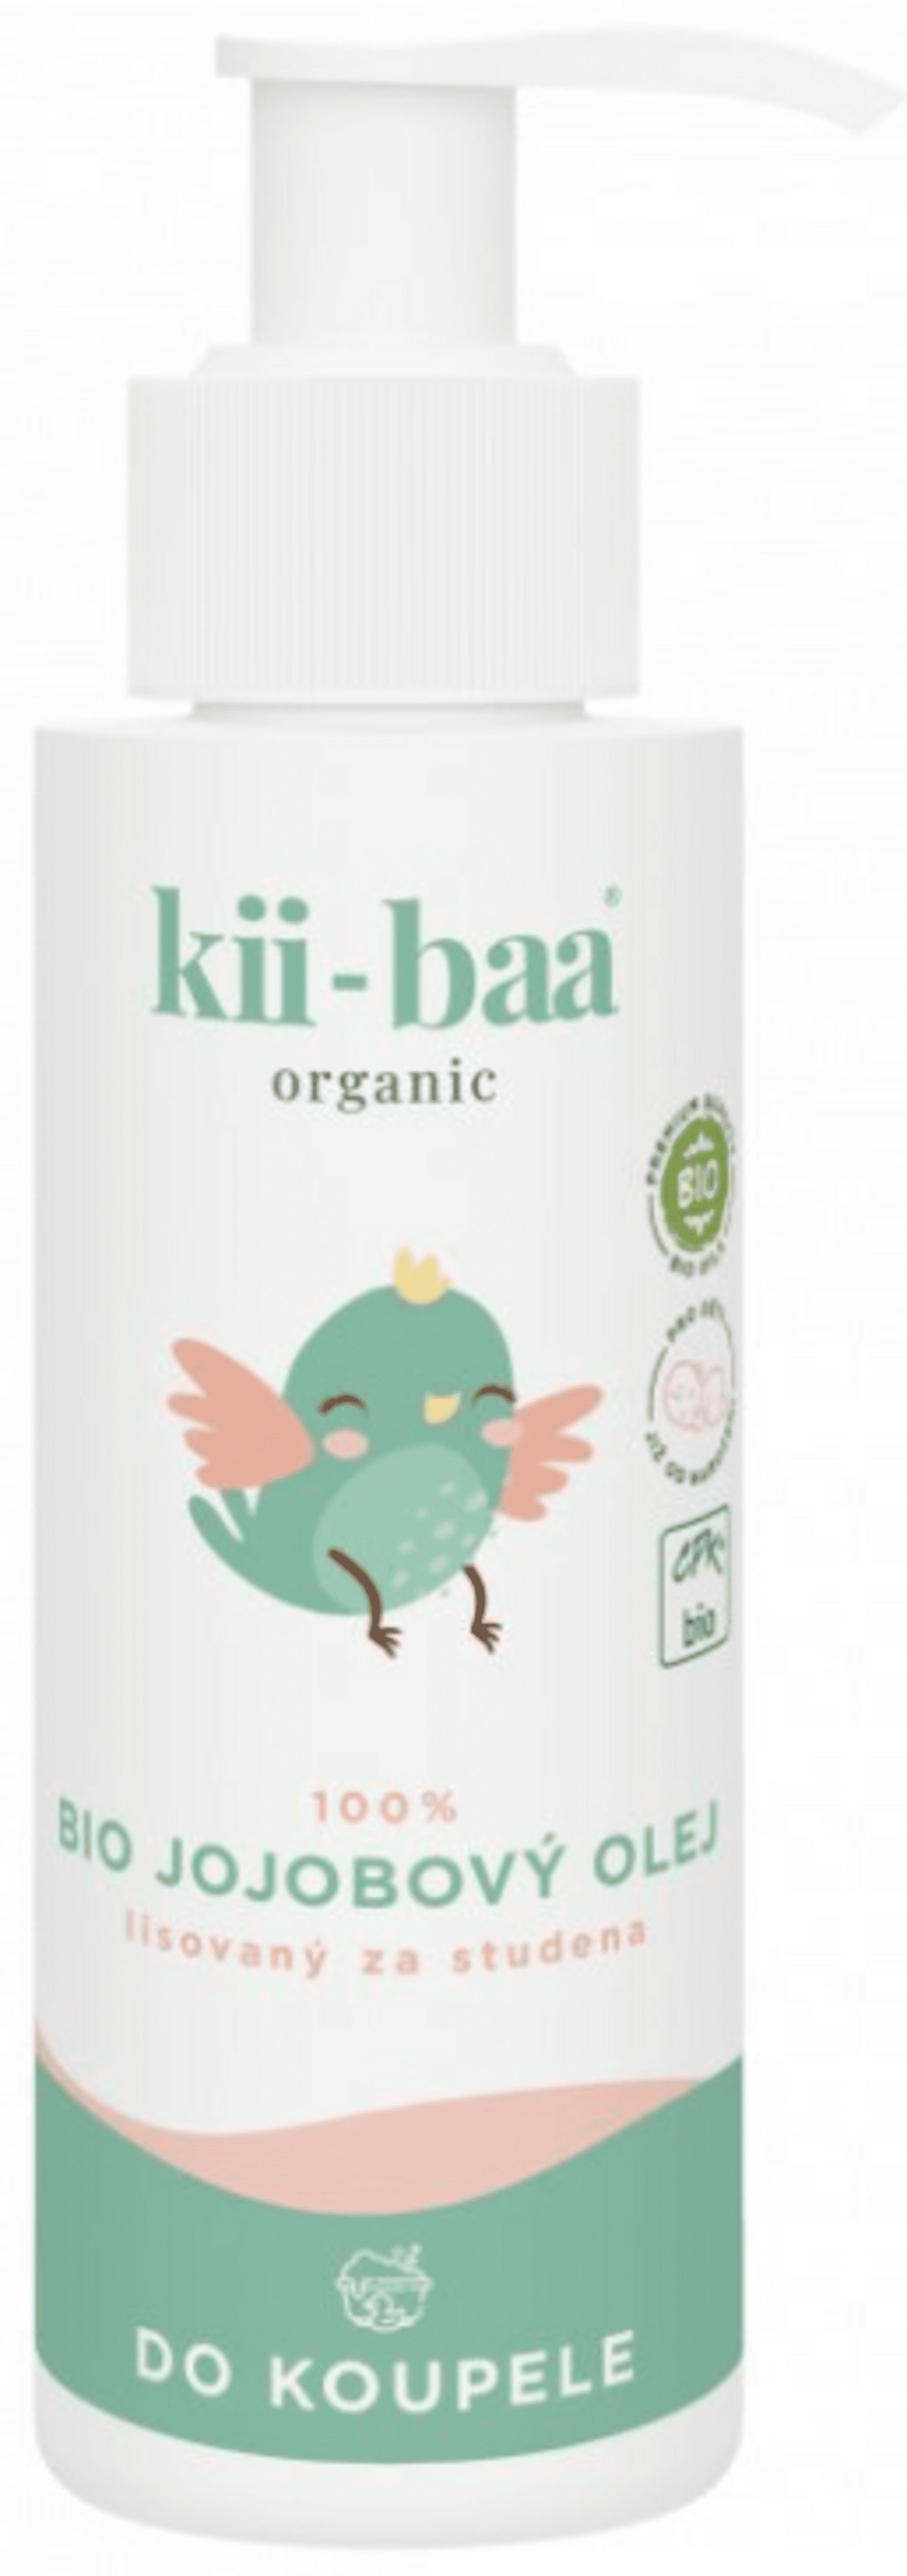 Levně Kii-baa organic 100% Jojobový olej 0+ do koupele BIO 100 ml